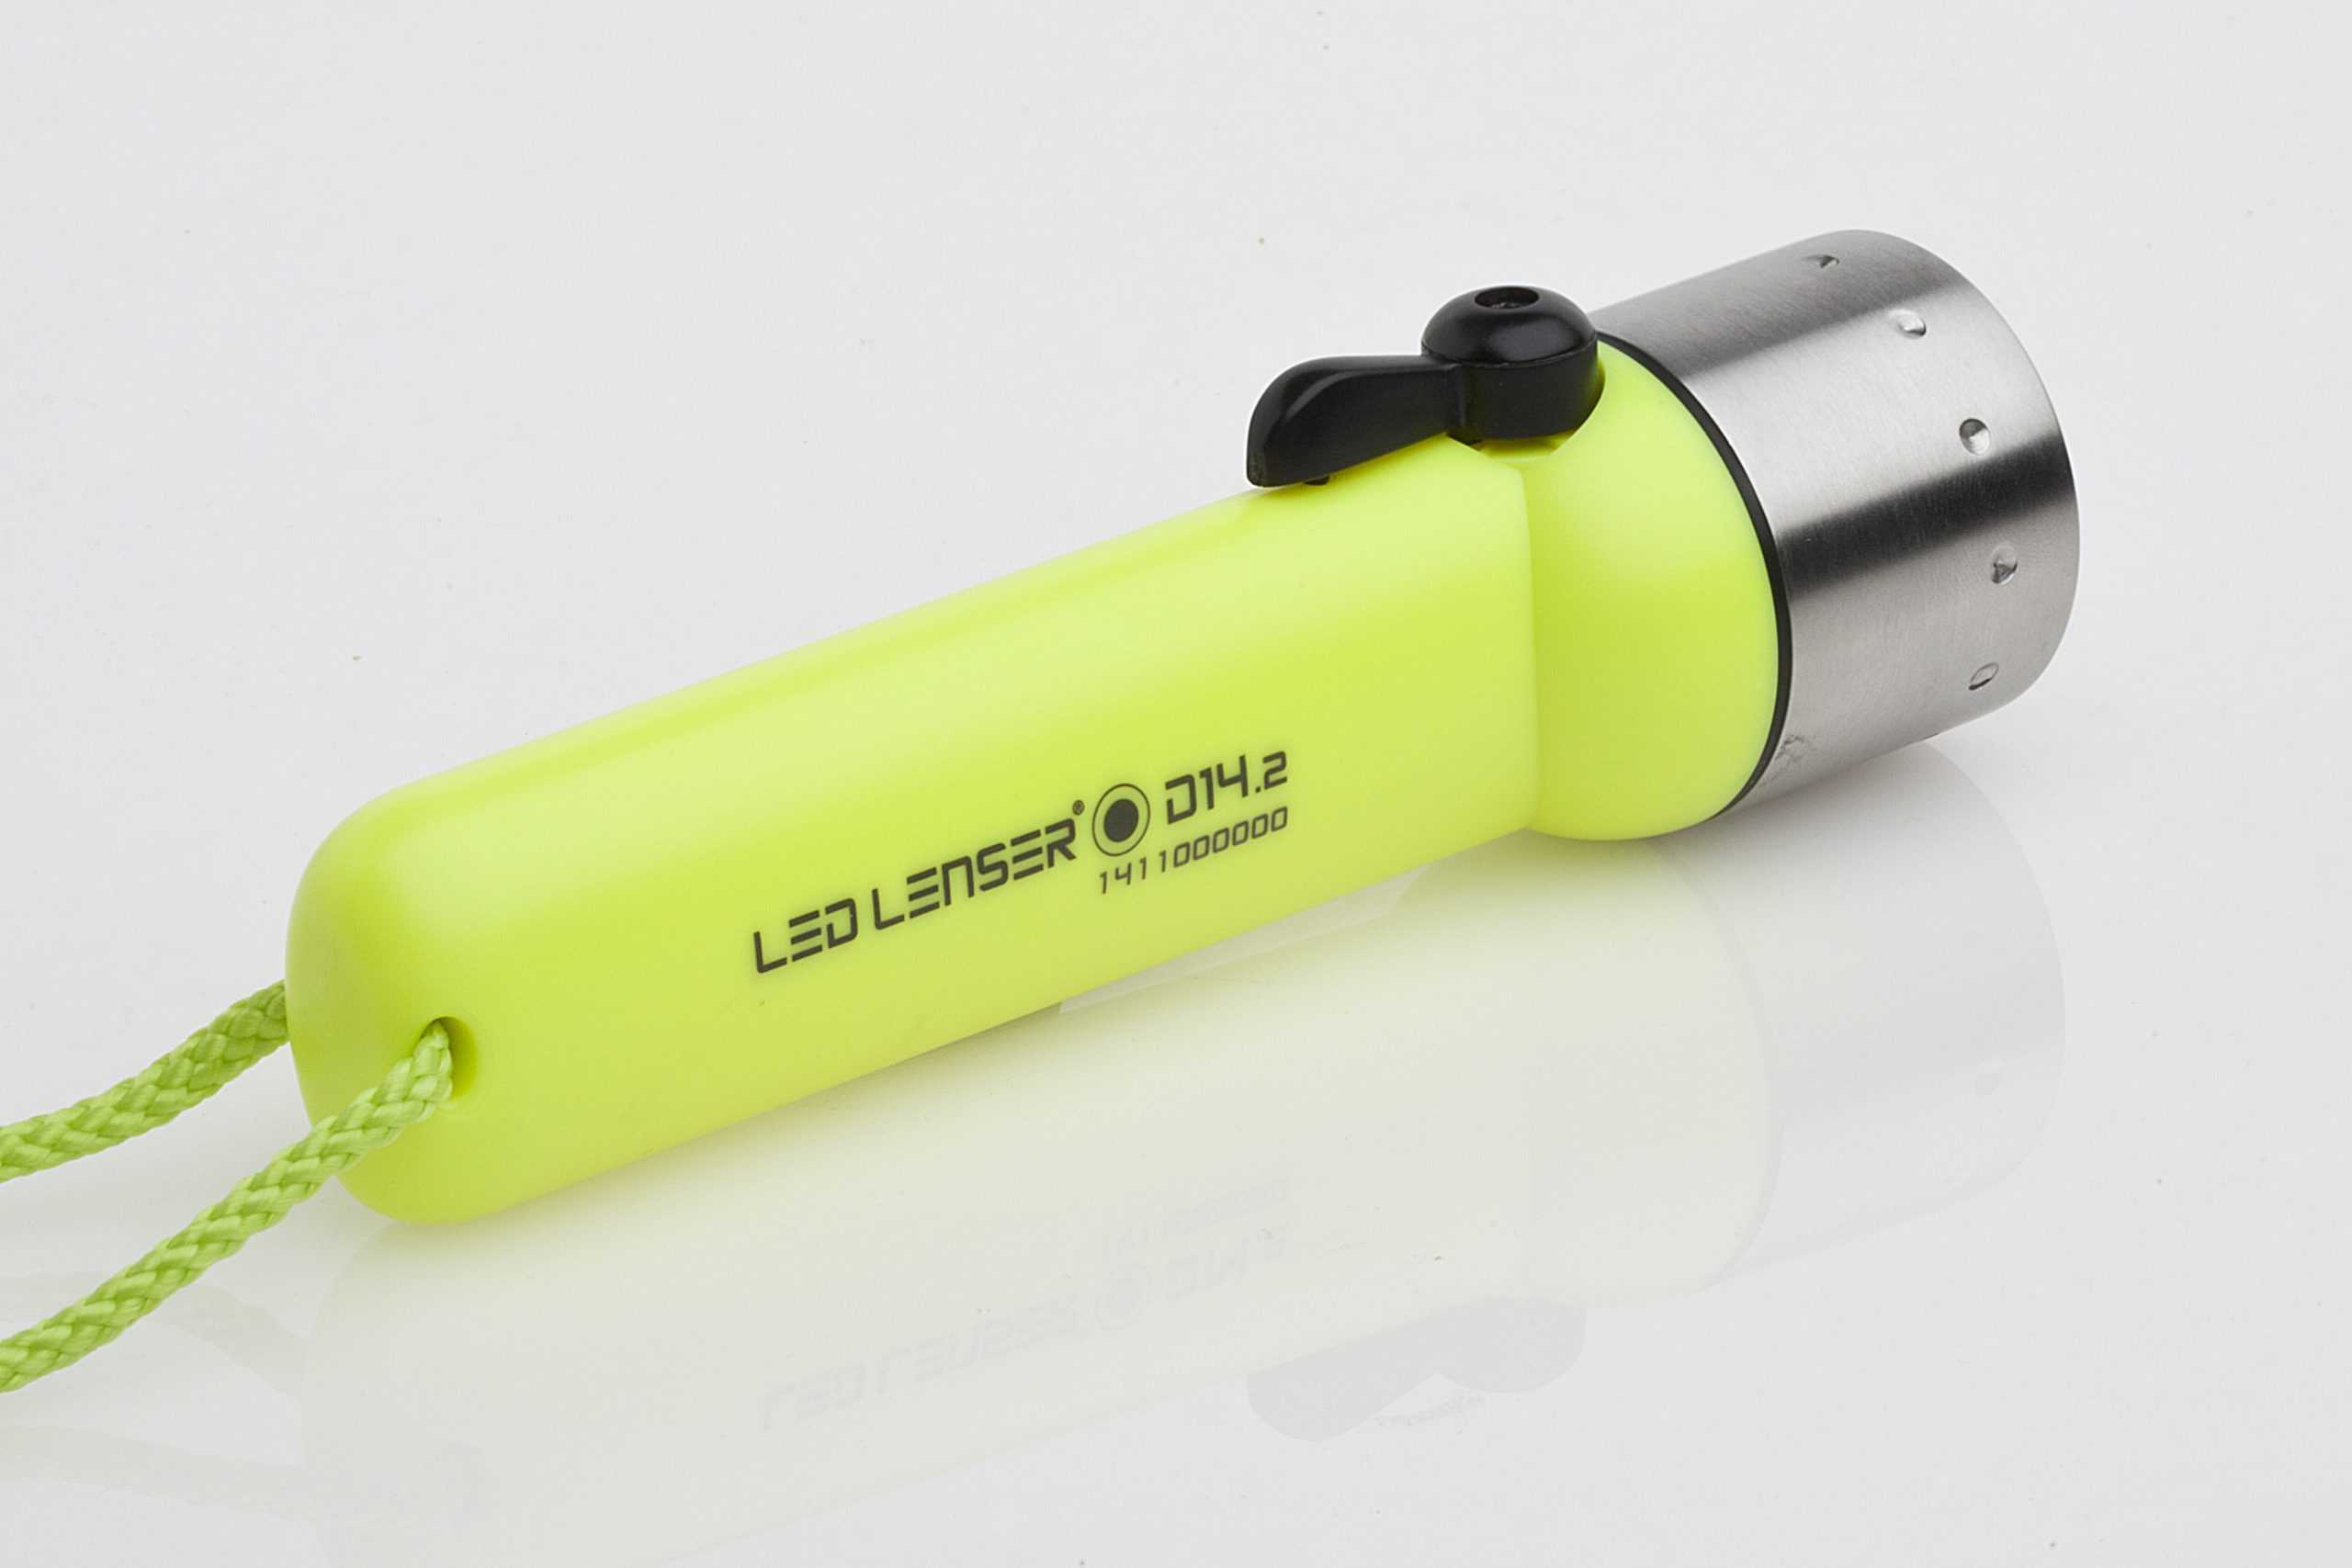 Ledlenser D14.2 Diving light  Advantageously shopping at